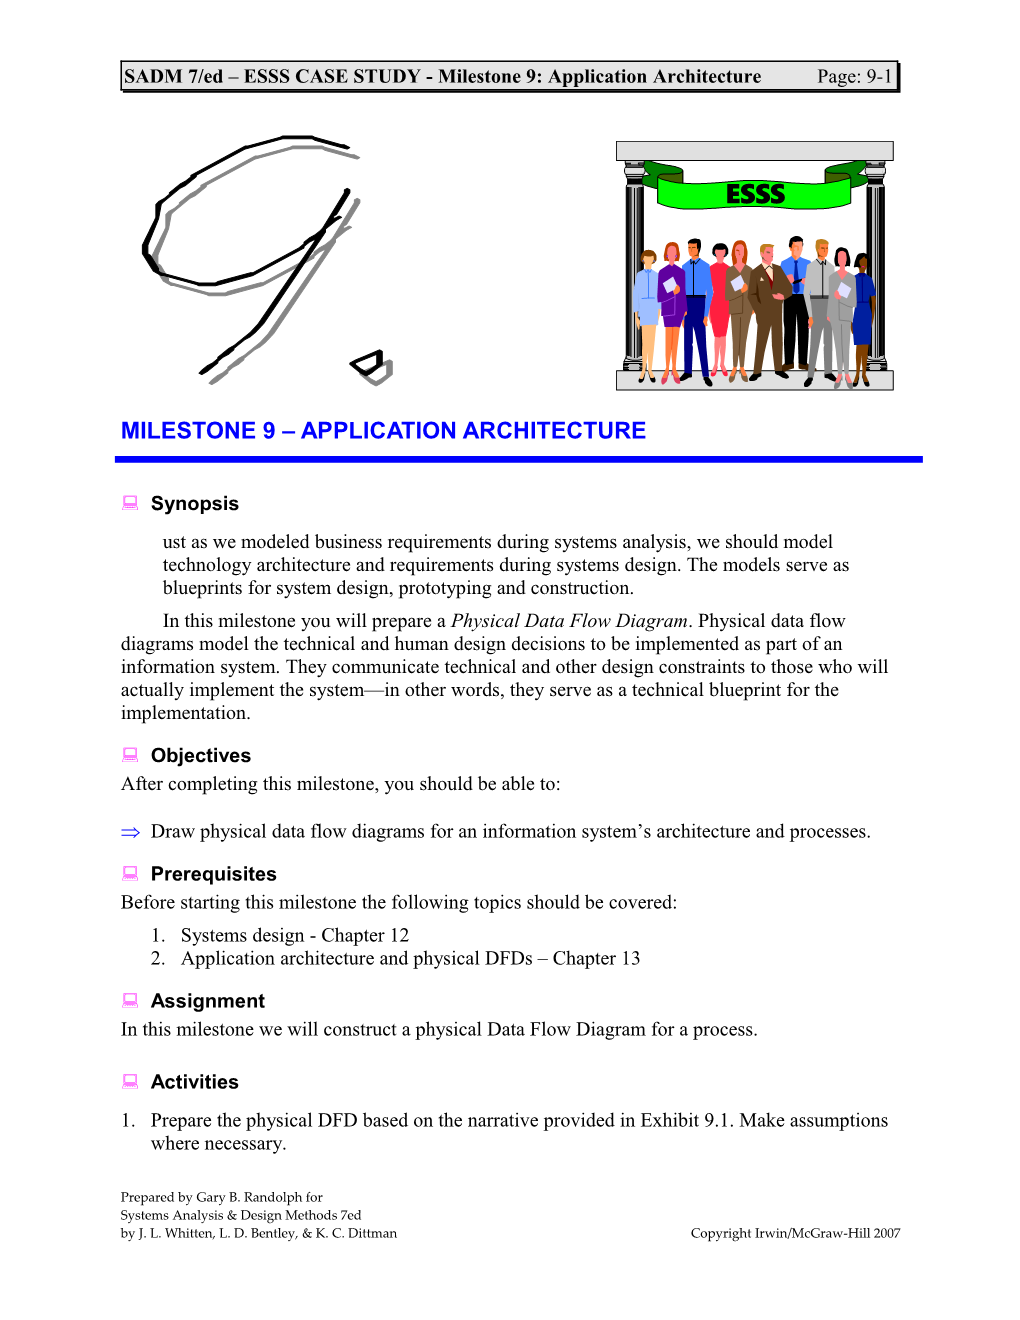 SADM 7/Ed ESSS CASE STUDY - Milestone 9: Application Architecture Page: 9-1